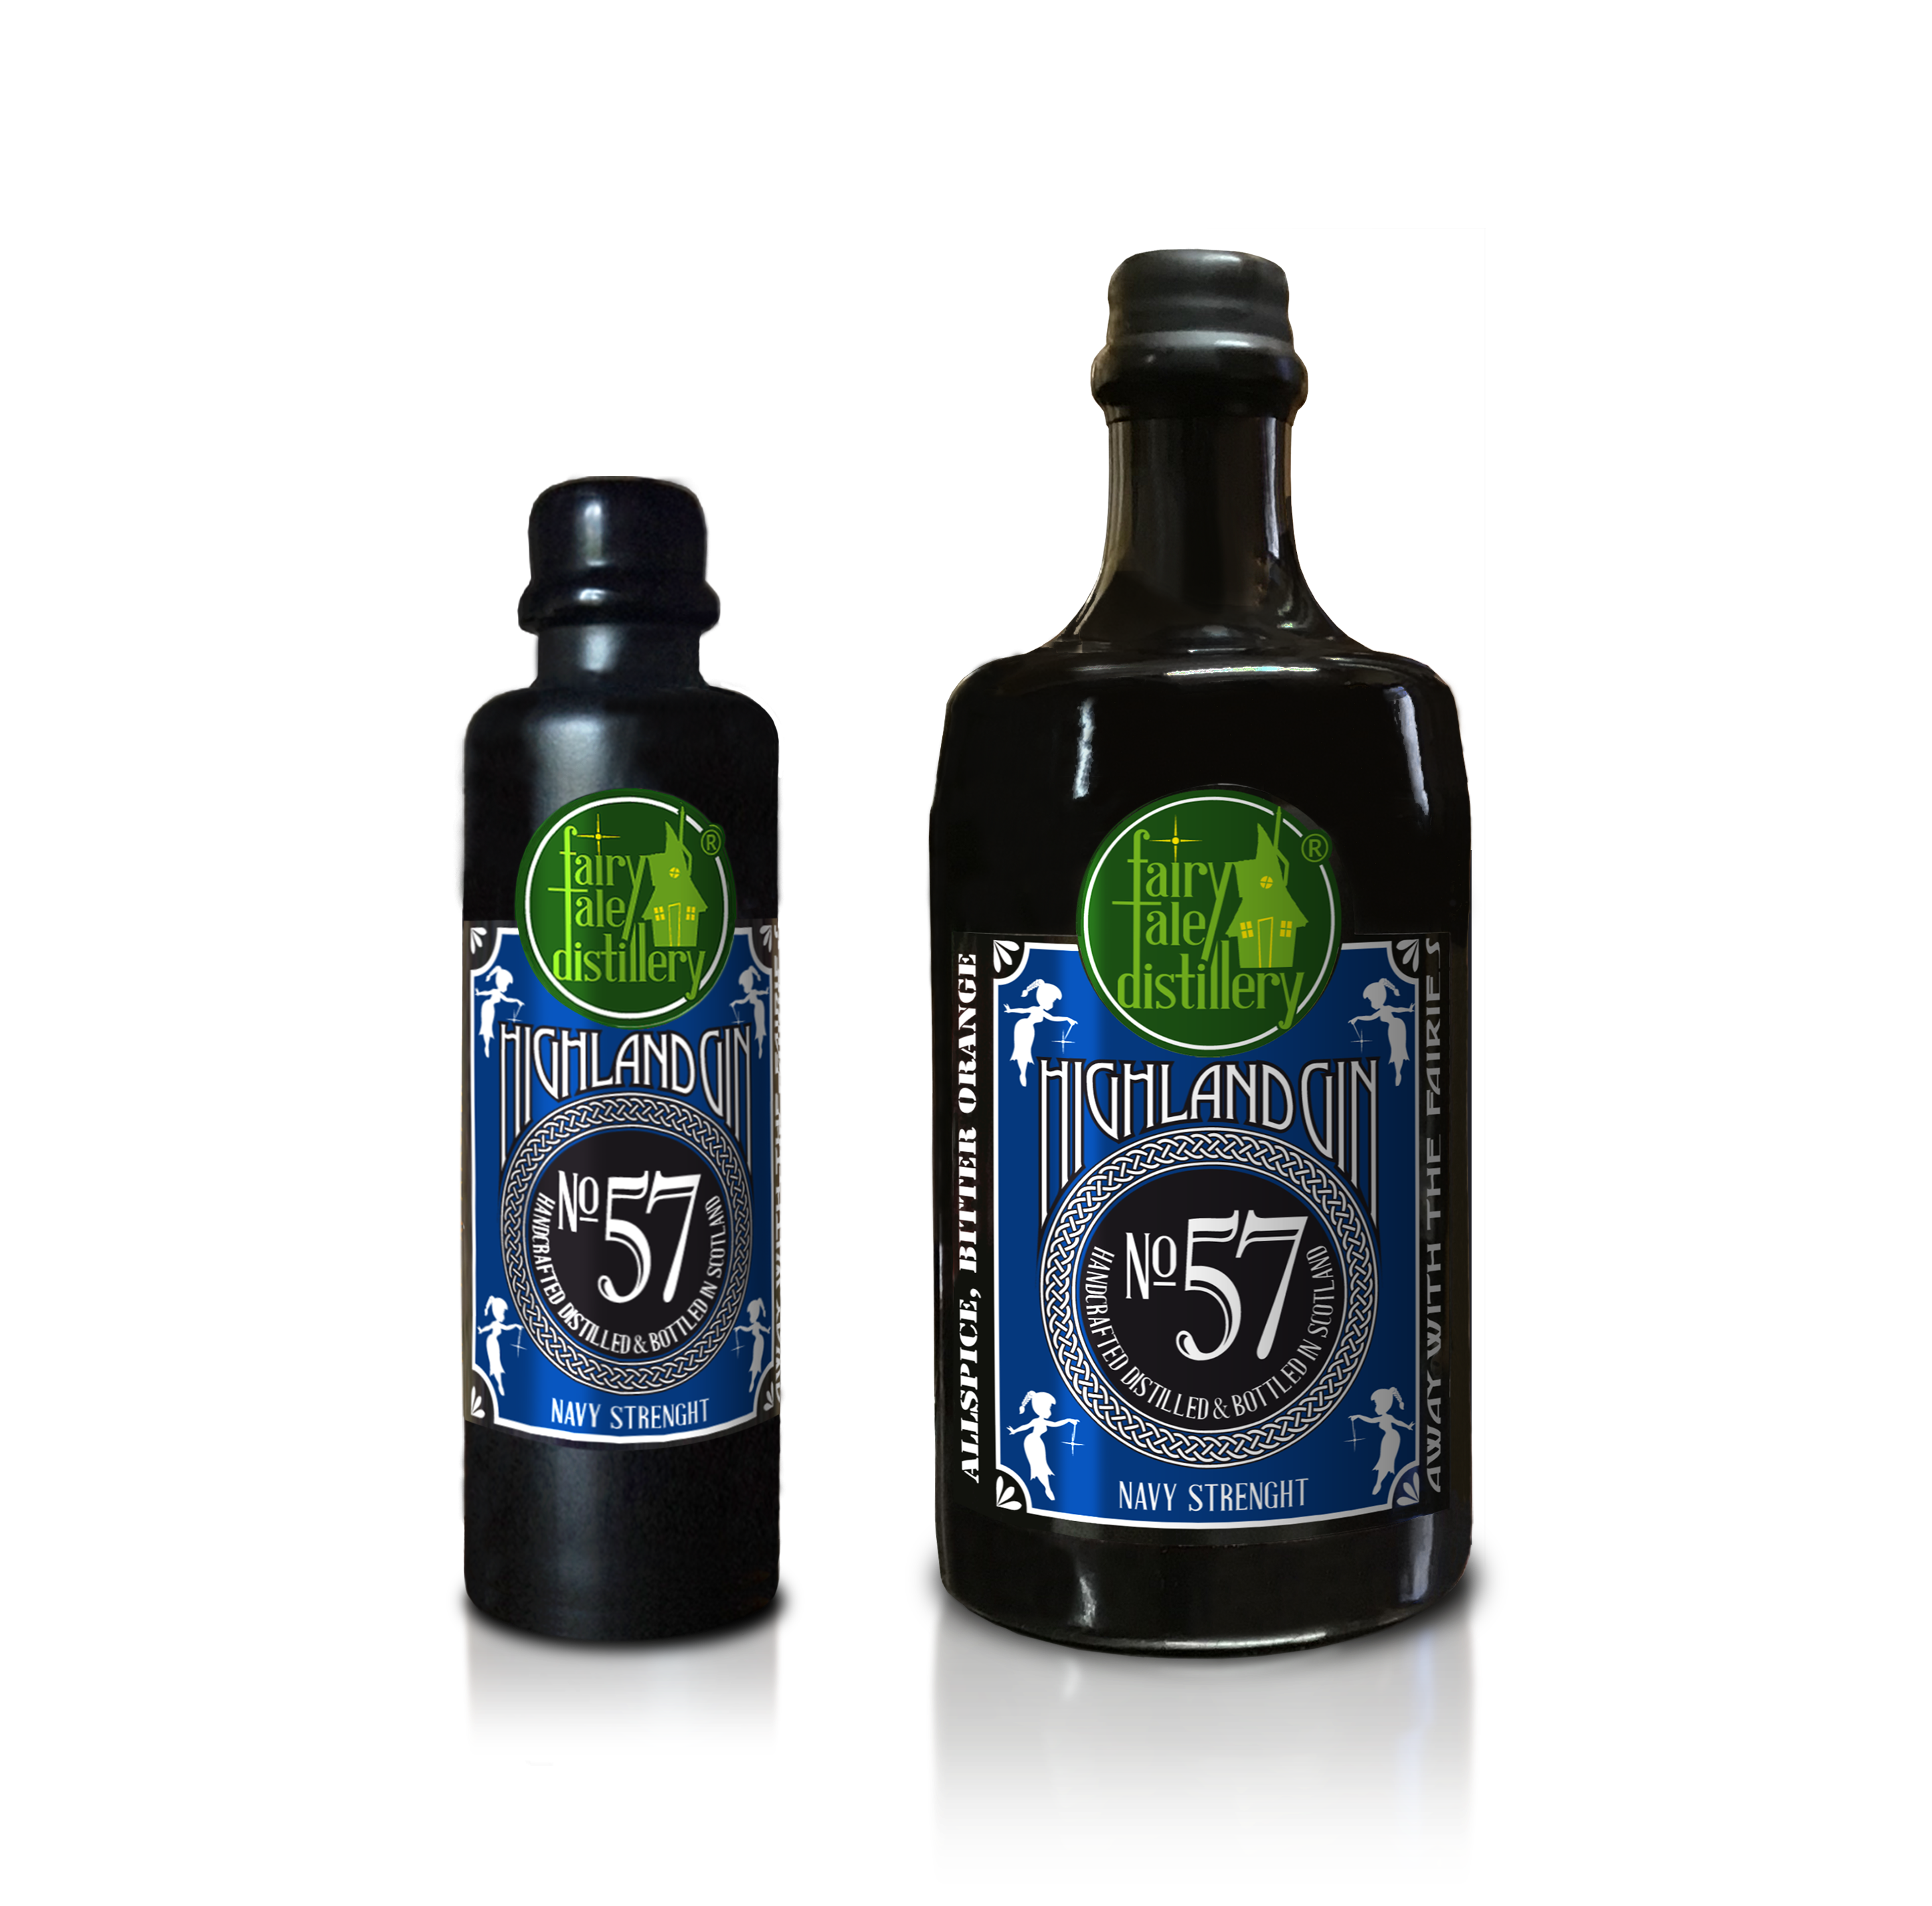 No 57 Navy Strength Highland Gin bottles from Fairytale Distillery